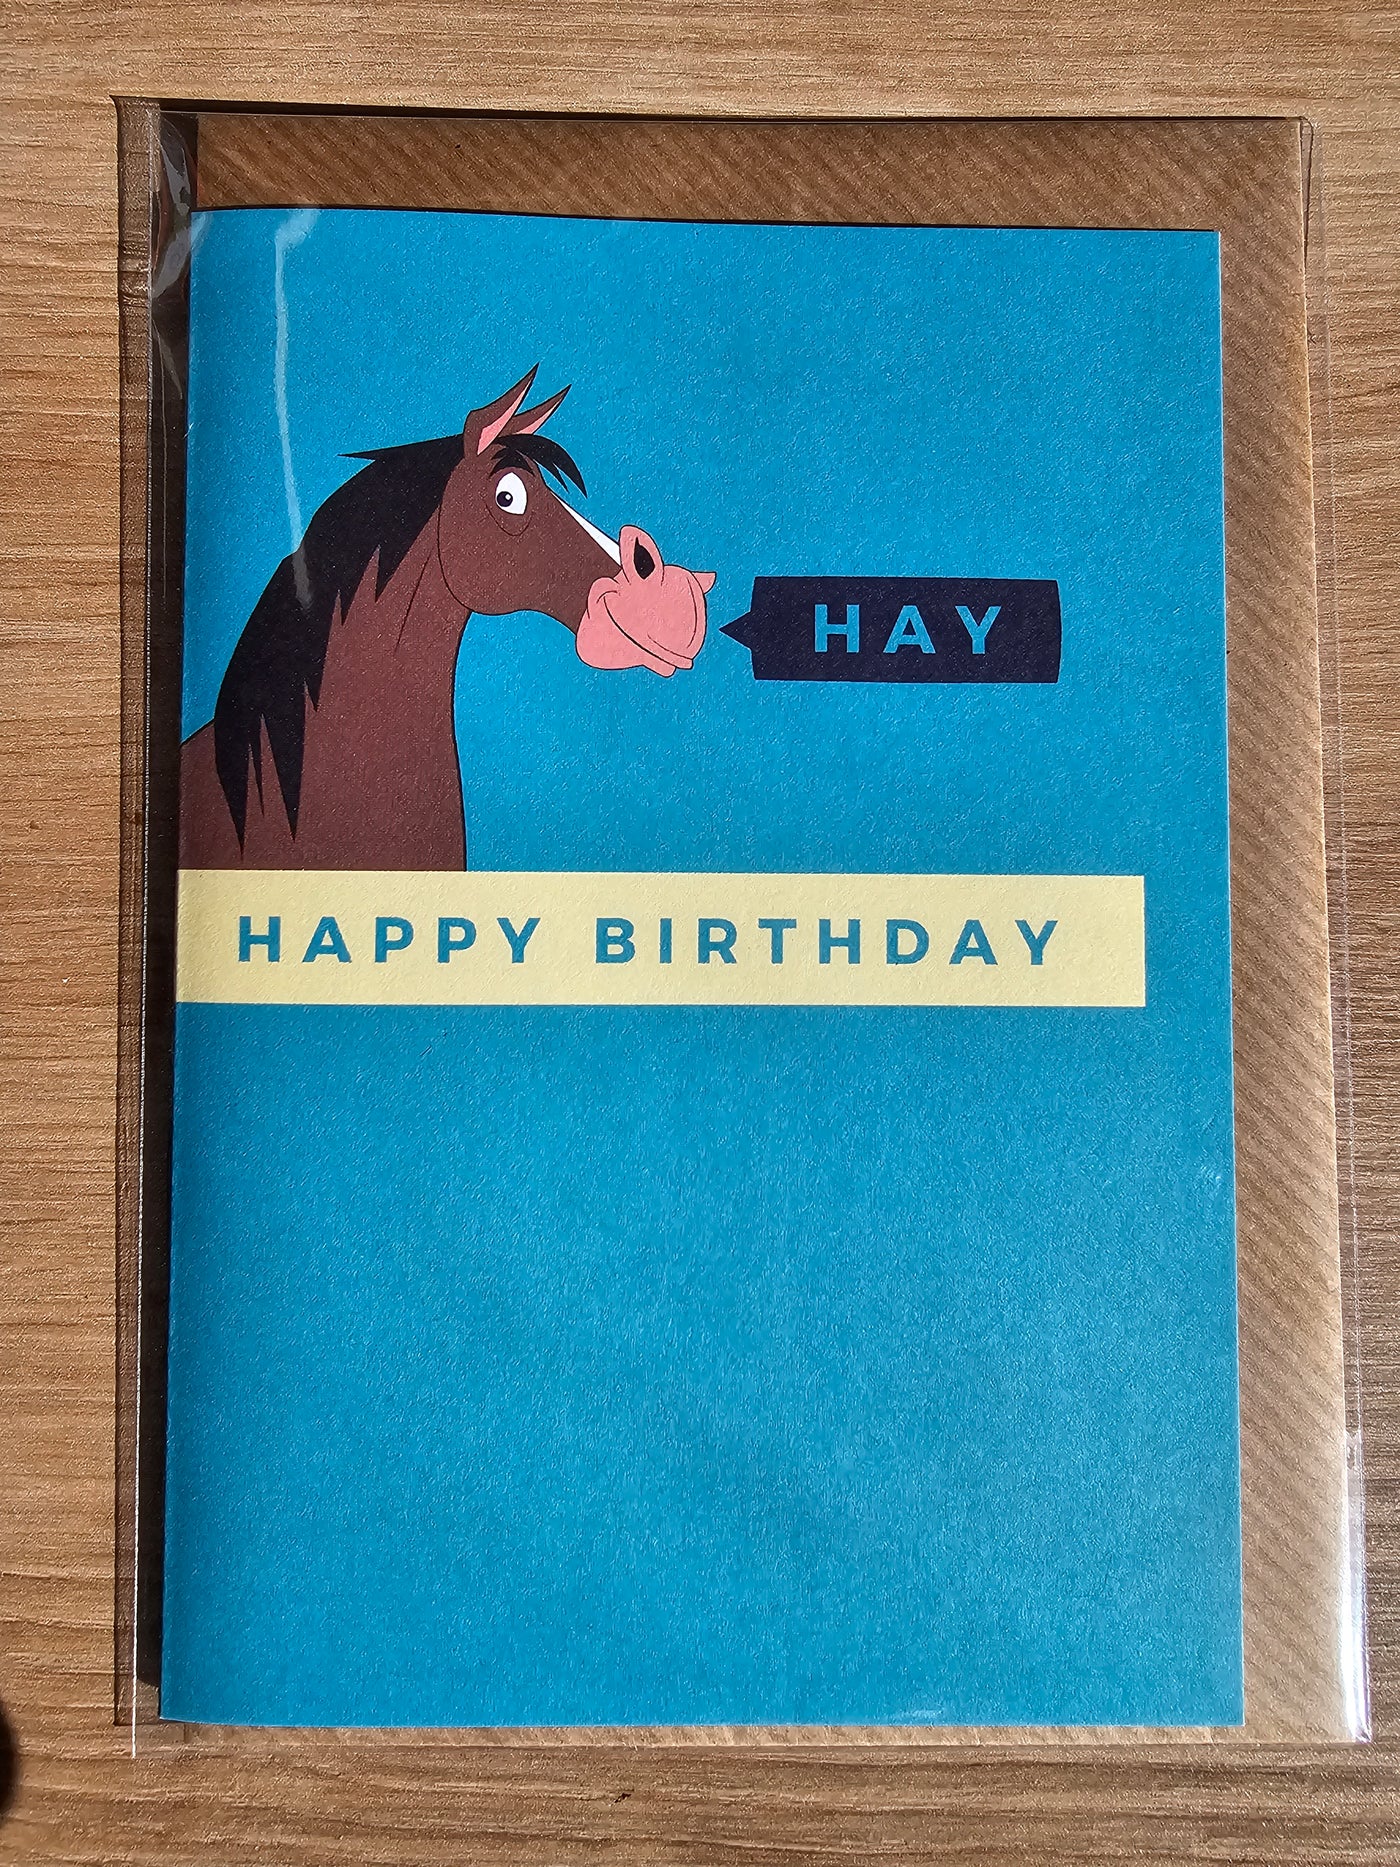 Hay Happy Birthday Card